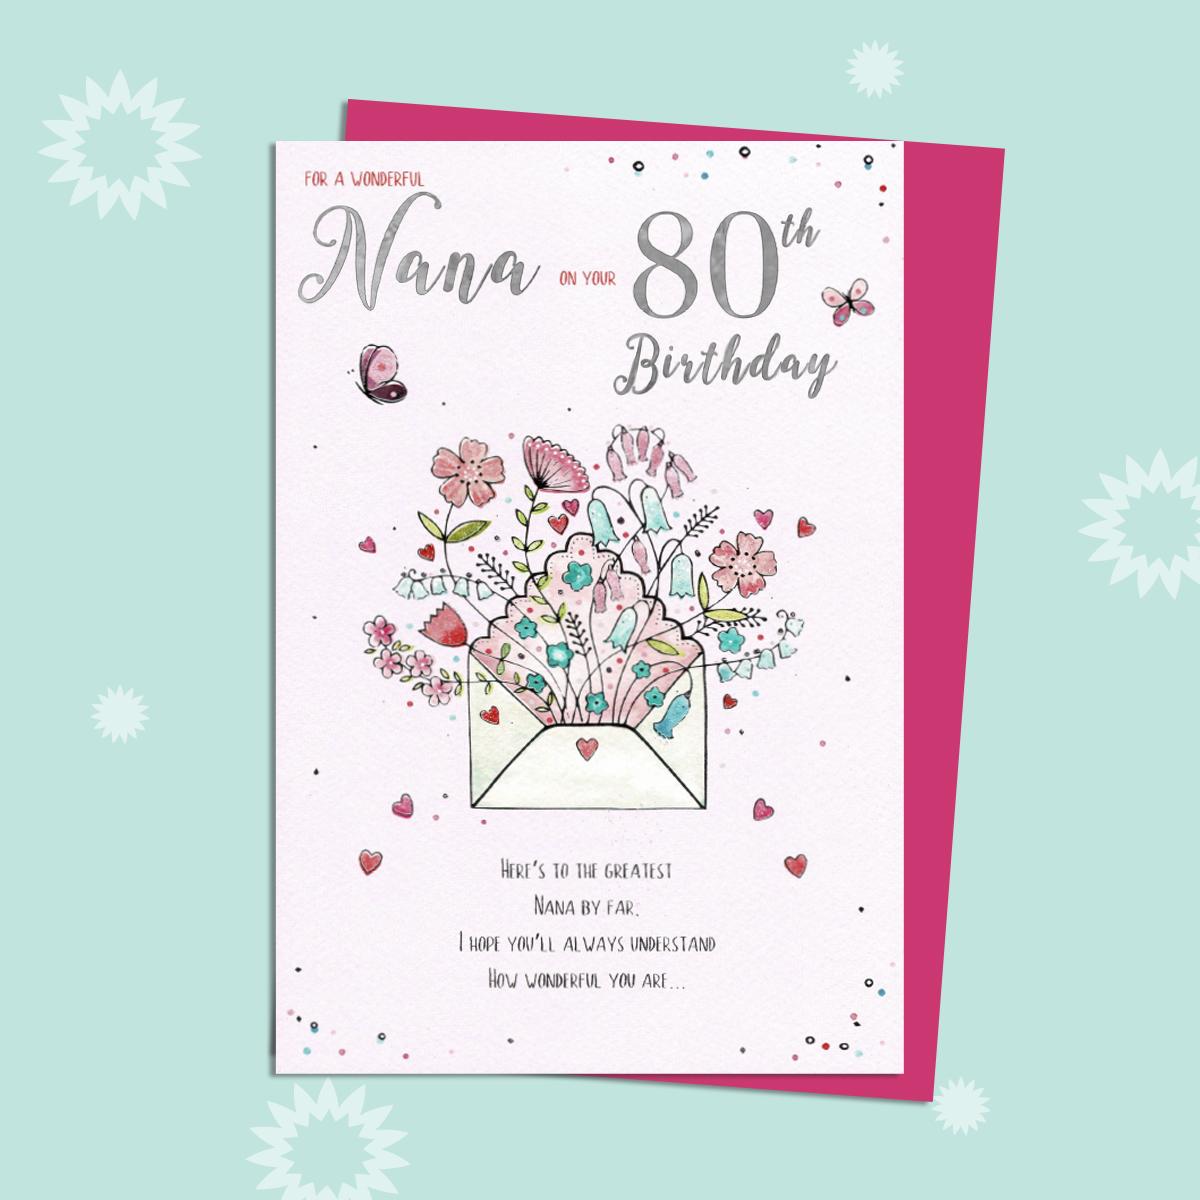 Nana On Your 80th Birthday Card Alongside Its Magenta Envelope